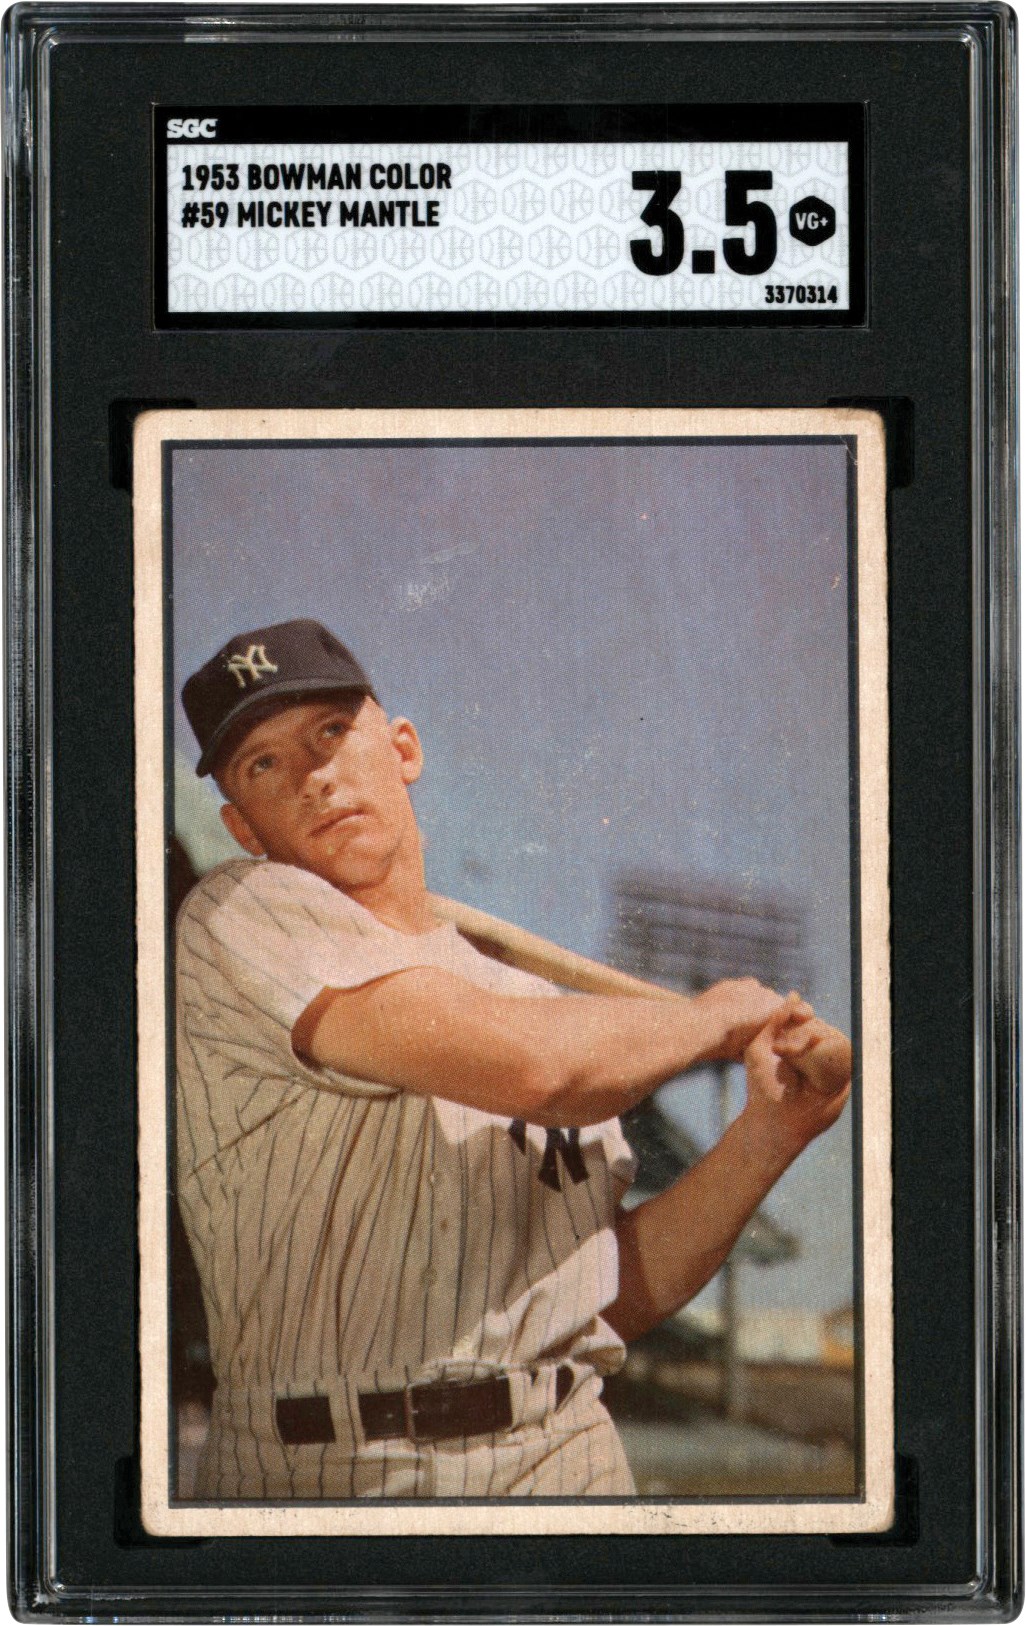 1953 Bowman Color Baseball #59 Mickey Mantle Card SGC VG+ 3.5